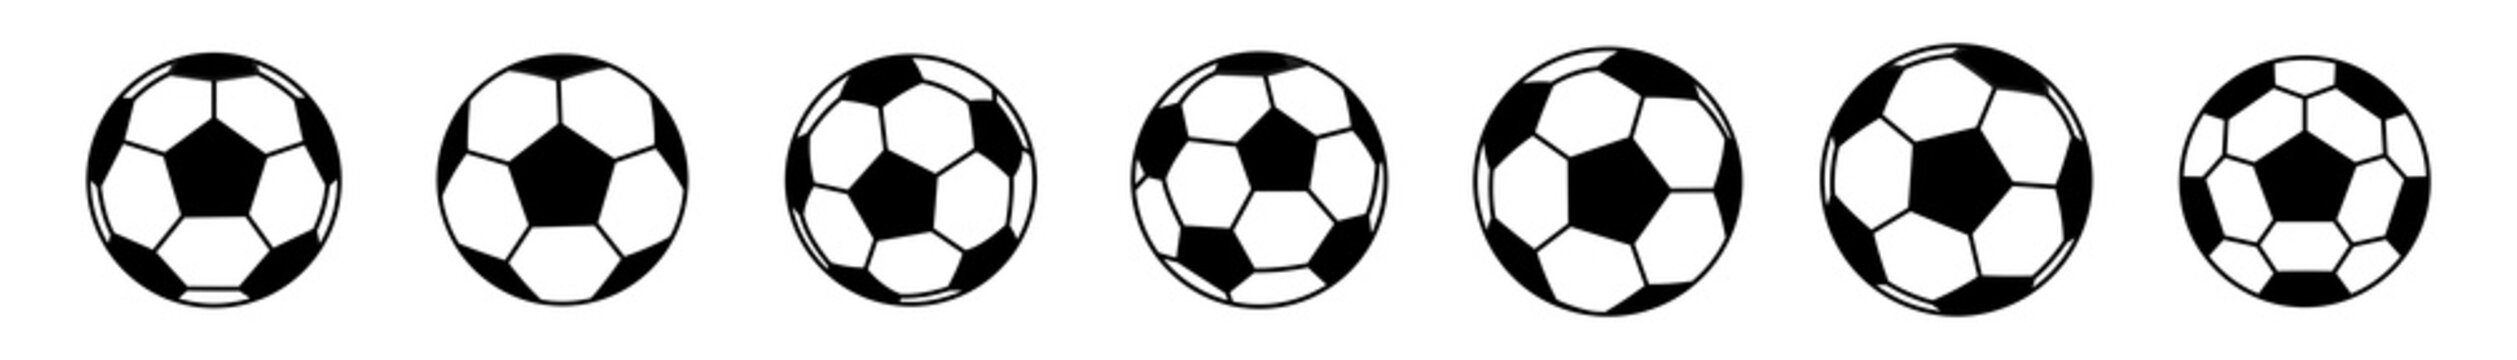 Soccer ball icon set. Ball icons. Football symbol. Vector illustration. 